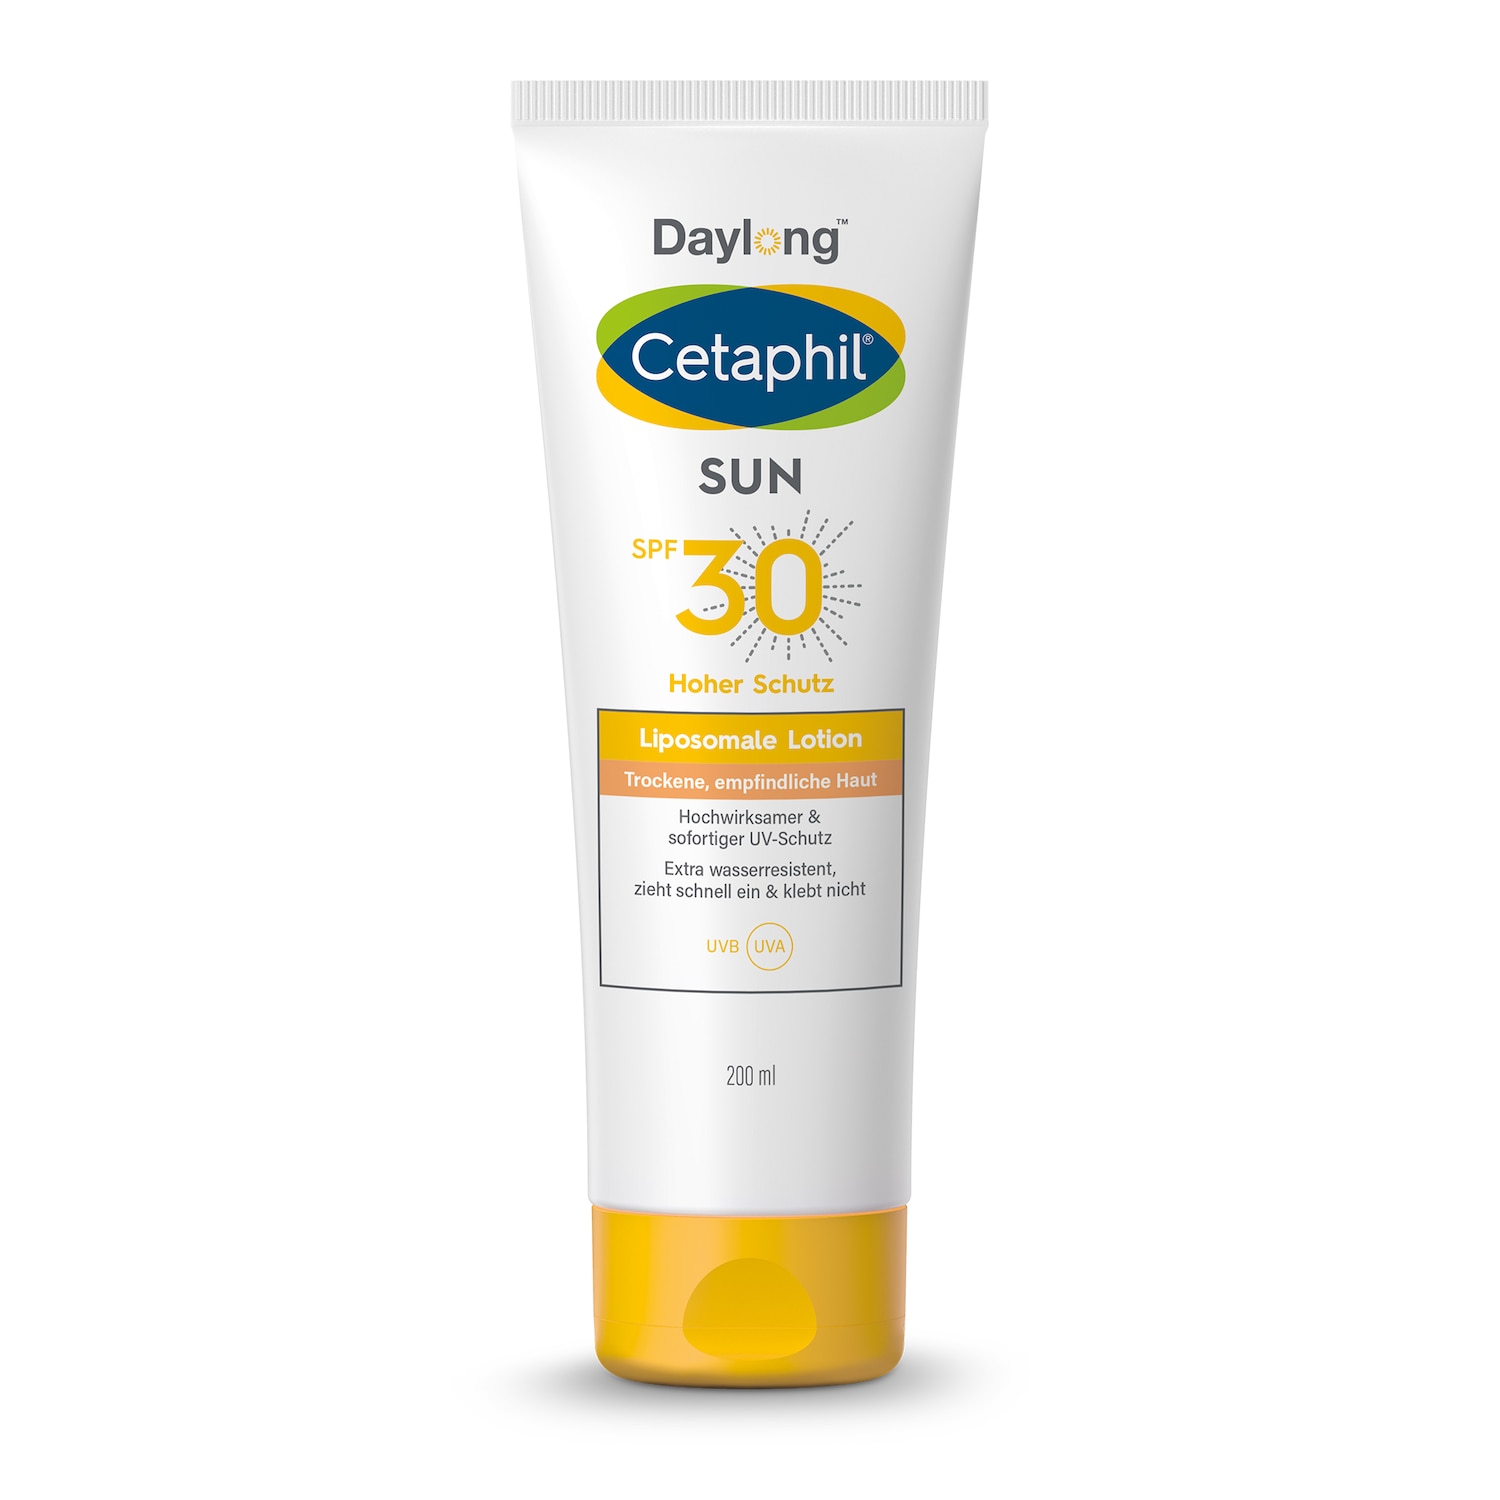 Cetaphil Sun Daylong SPF 30 liposomal lotion